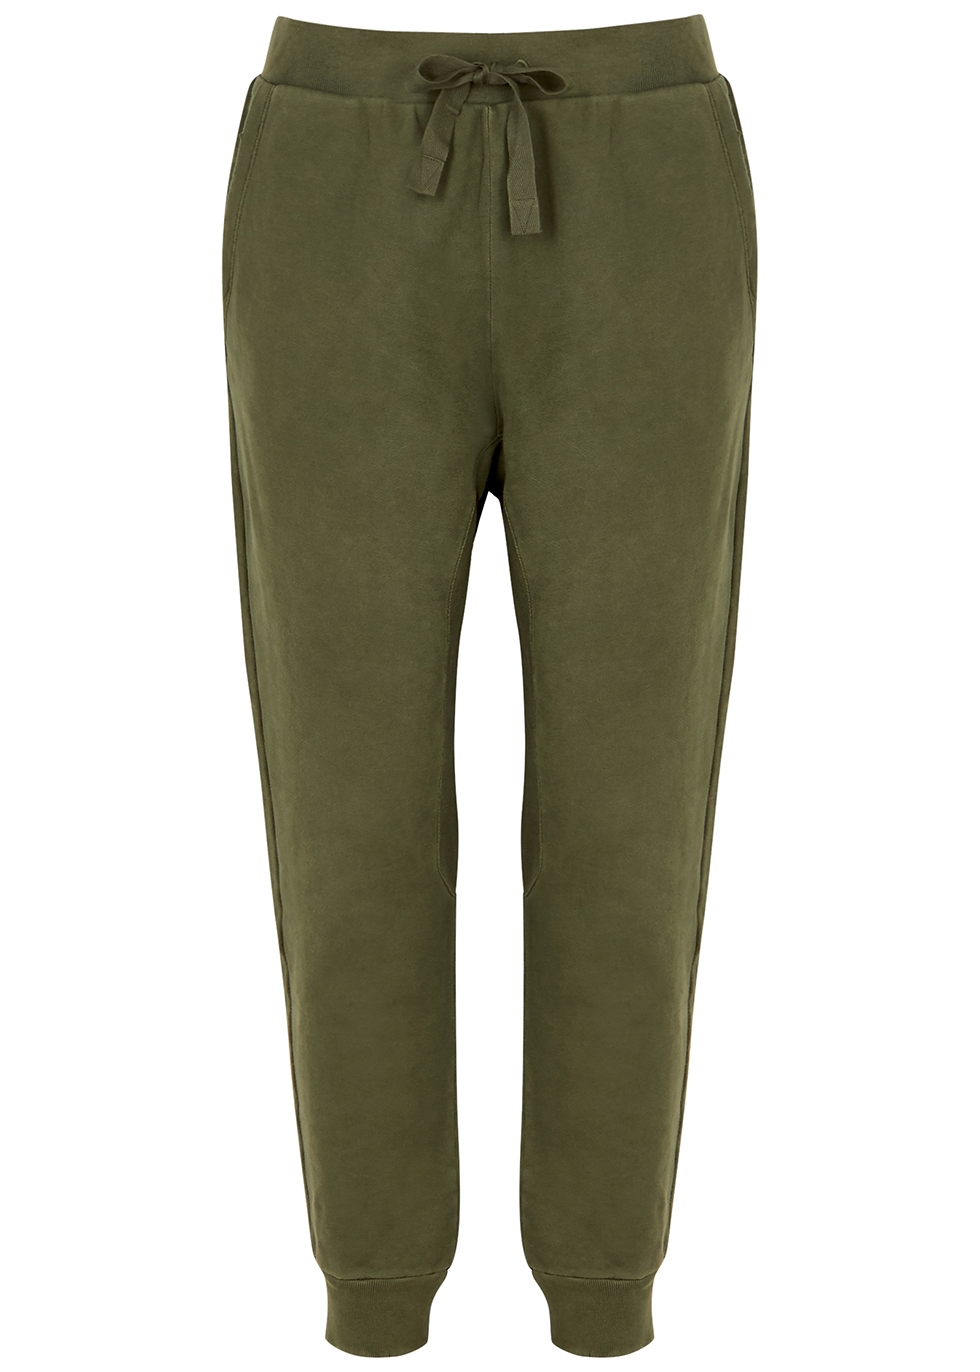 Easy dark green cotton sweatpants